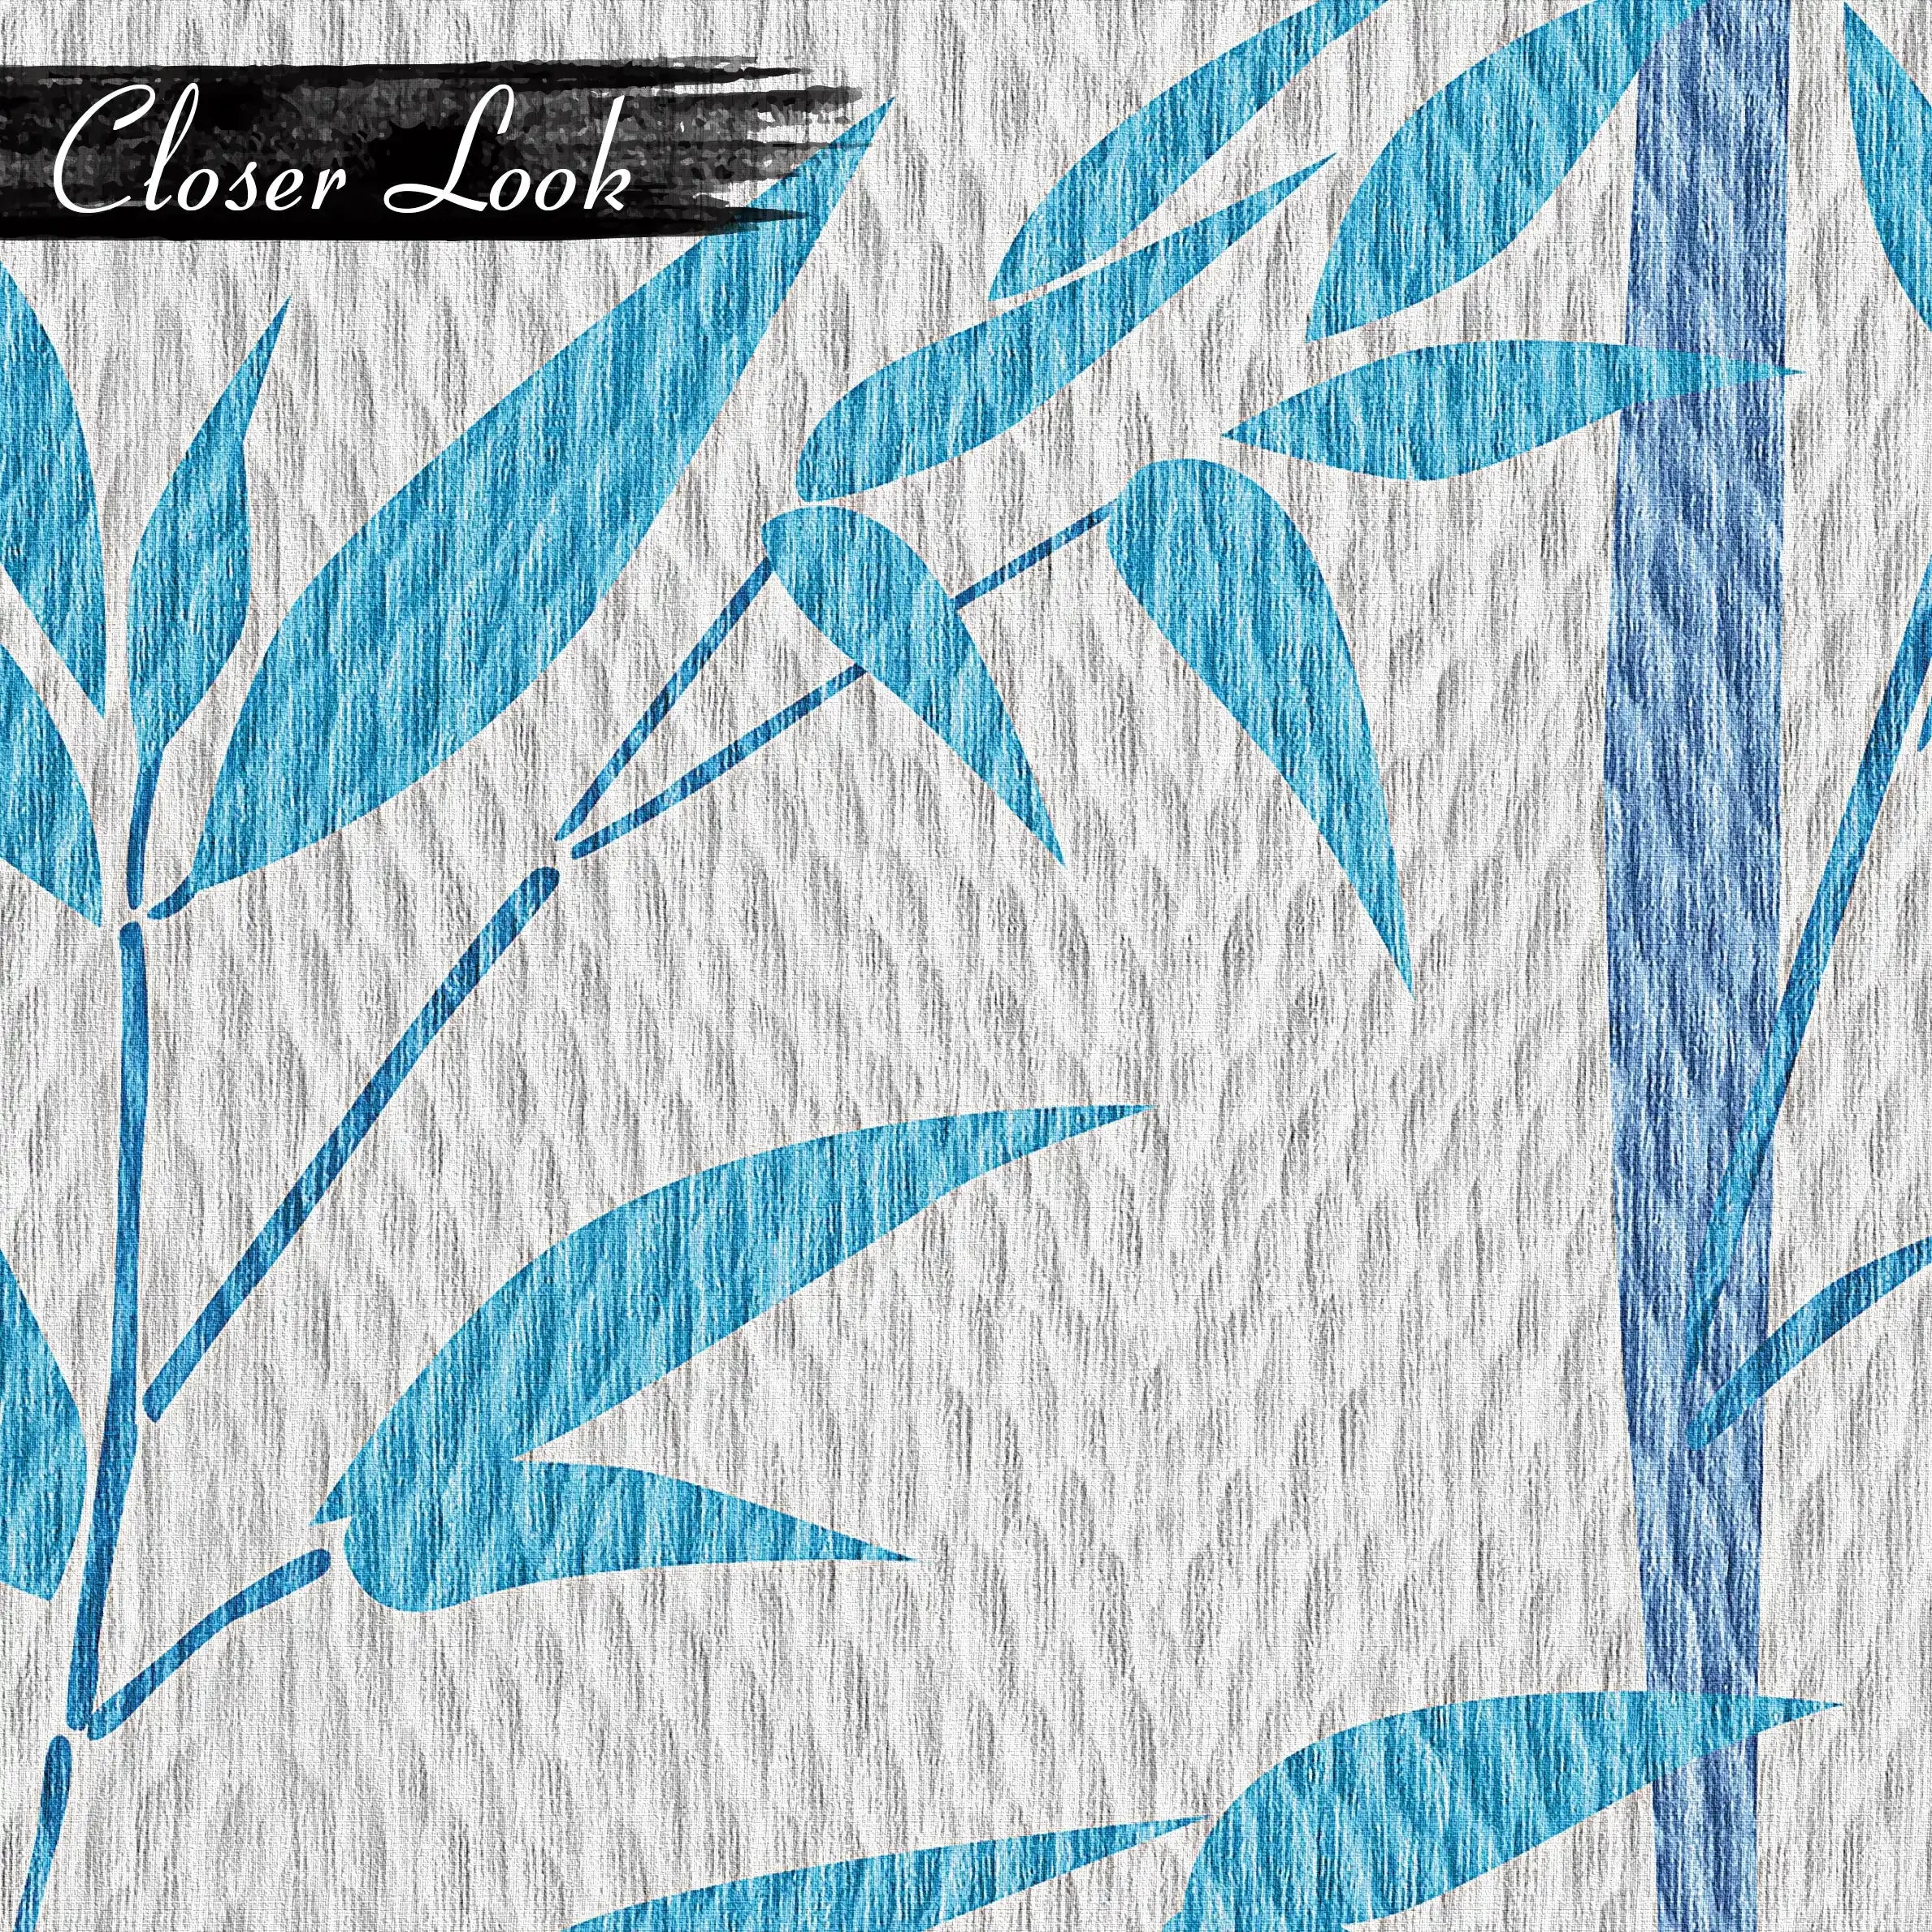 3020-B / Tropical Bamboo Leaf Wallpaper, Peel and Stick, Easy Install, Adhesive Boho Decor for Kitchen, Bathroom - Artevella